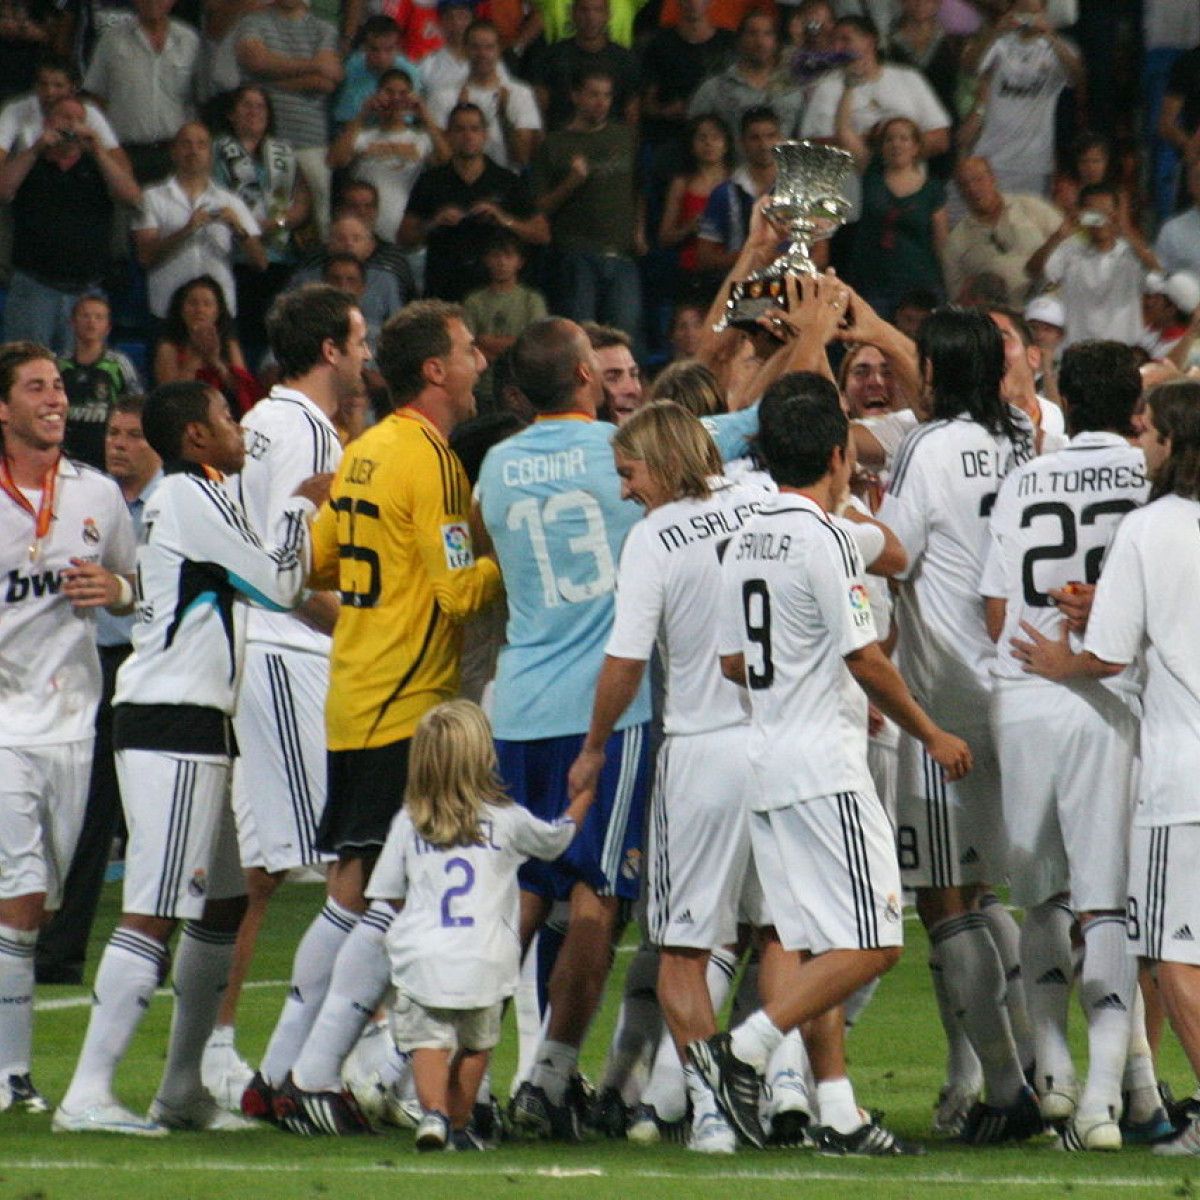 2023 UEFA Champions League final - Wikipedia